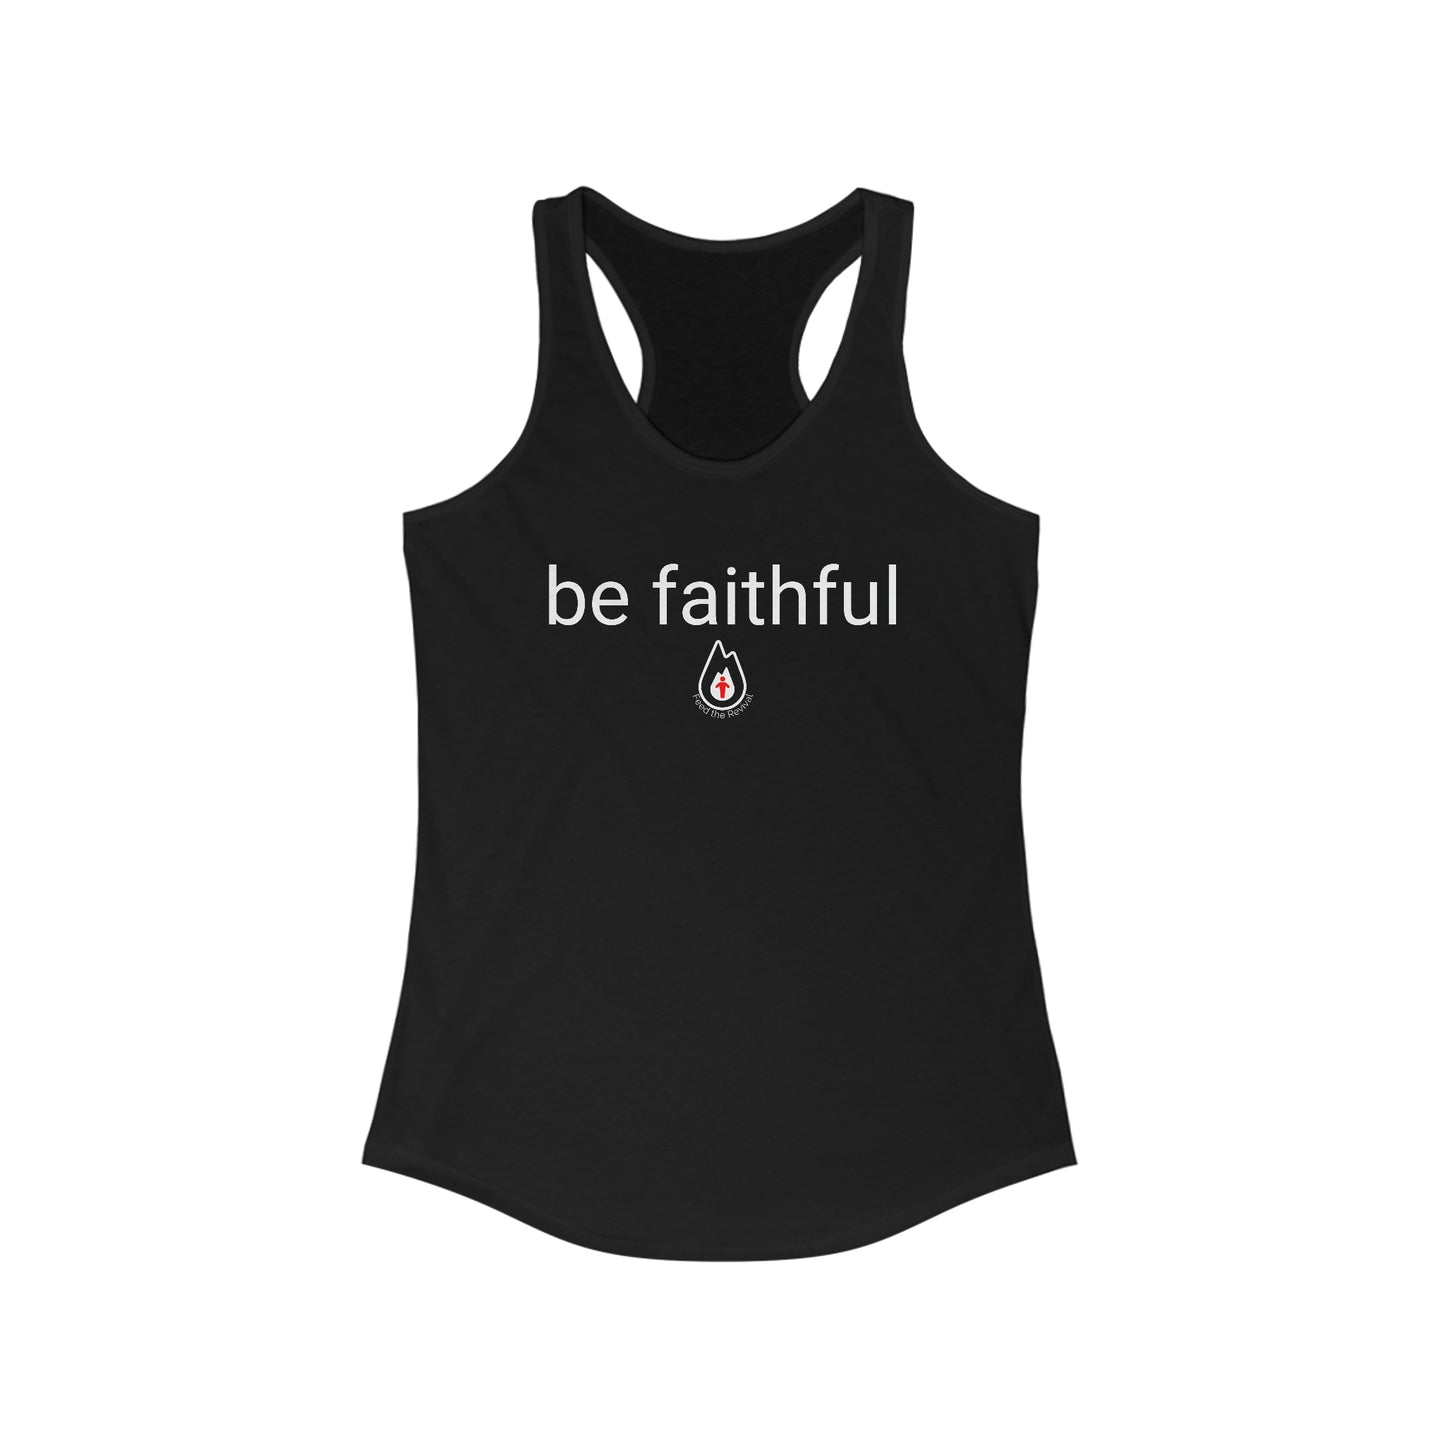 Be Faithful- Women’s Ideal Racerback Tank